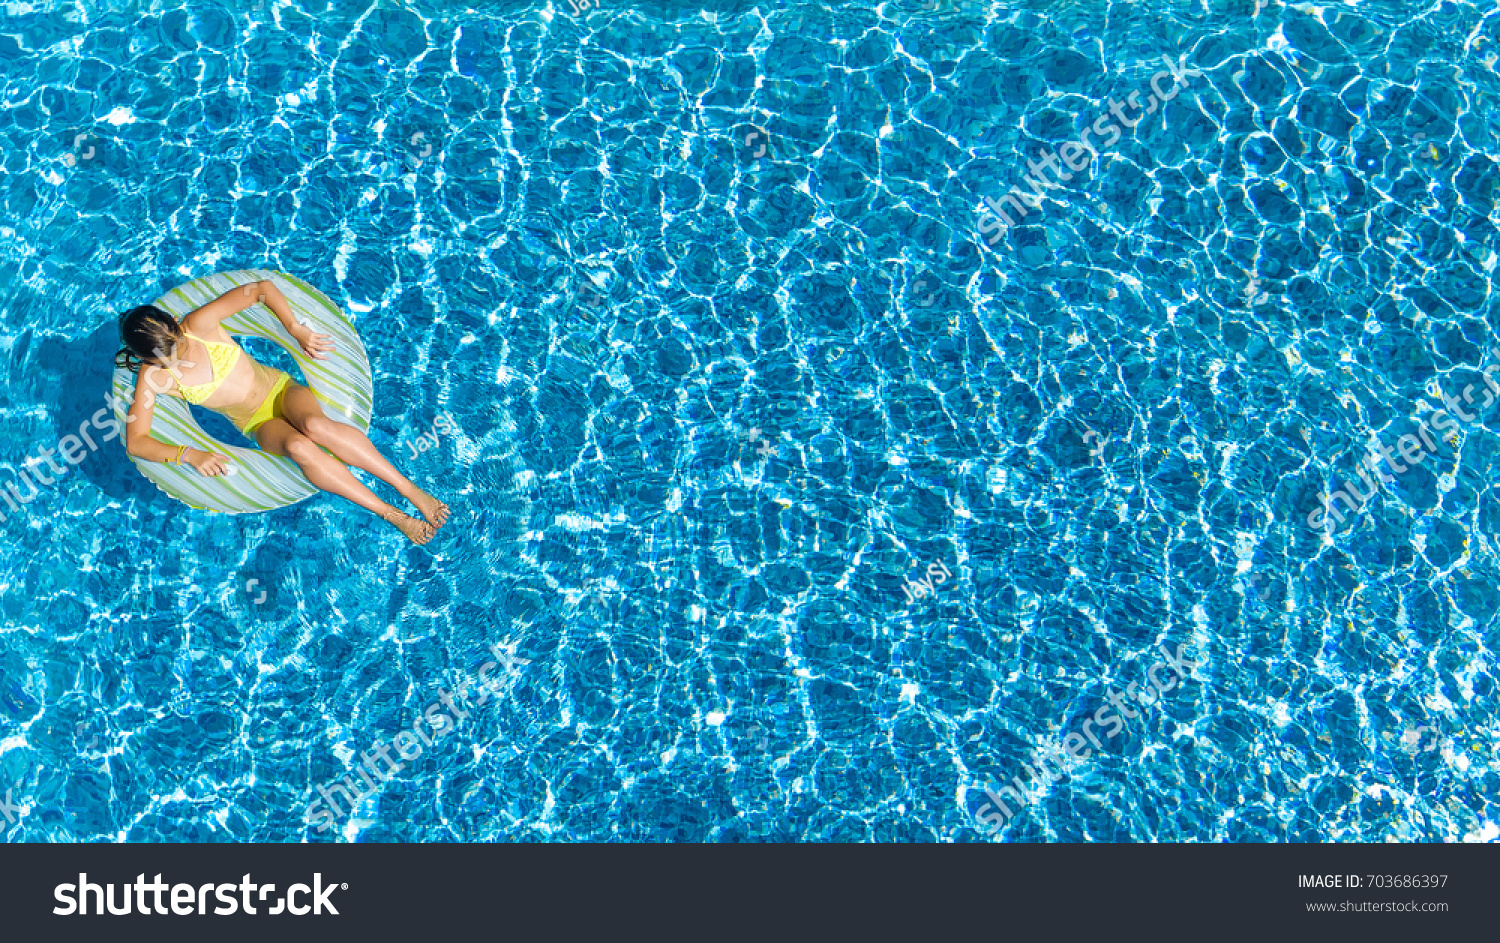 129,719 Swimming pool kids Images, Stock Photos & Vectors | Shutterstock